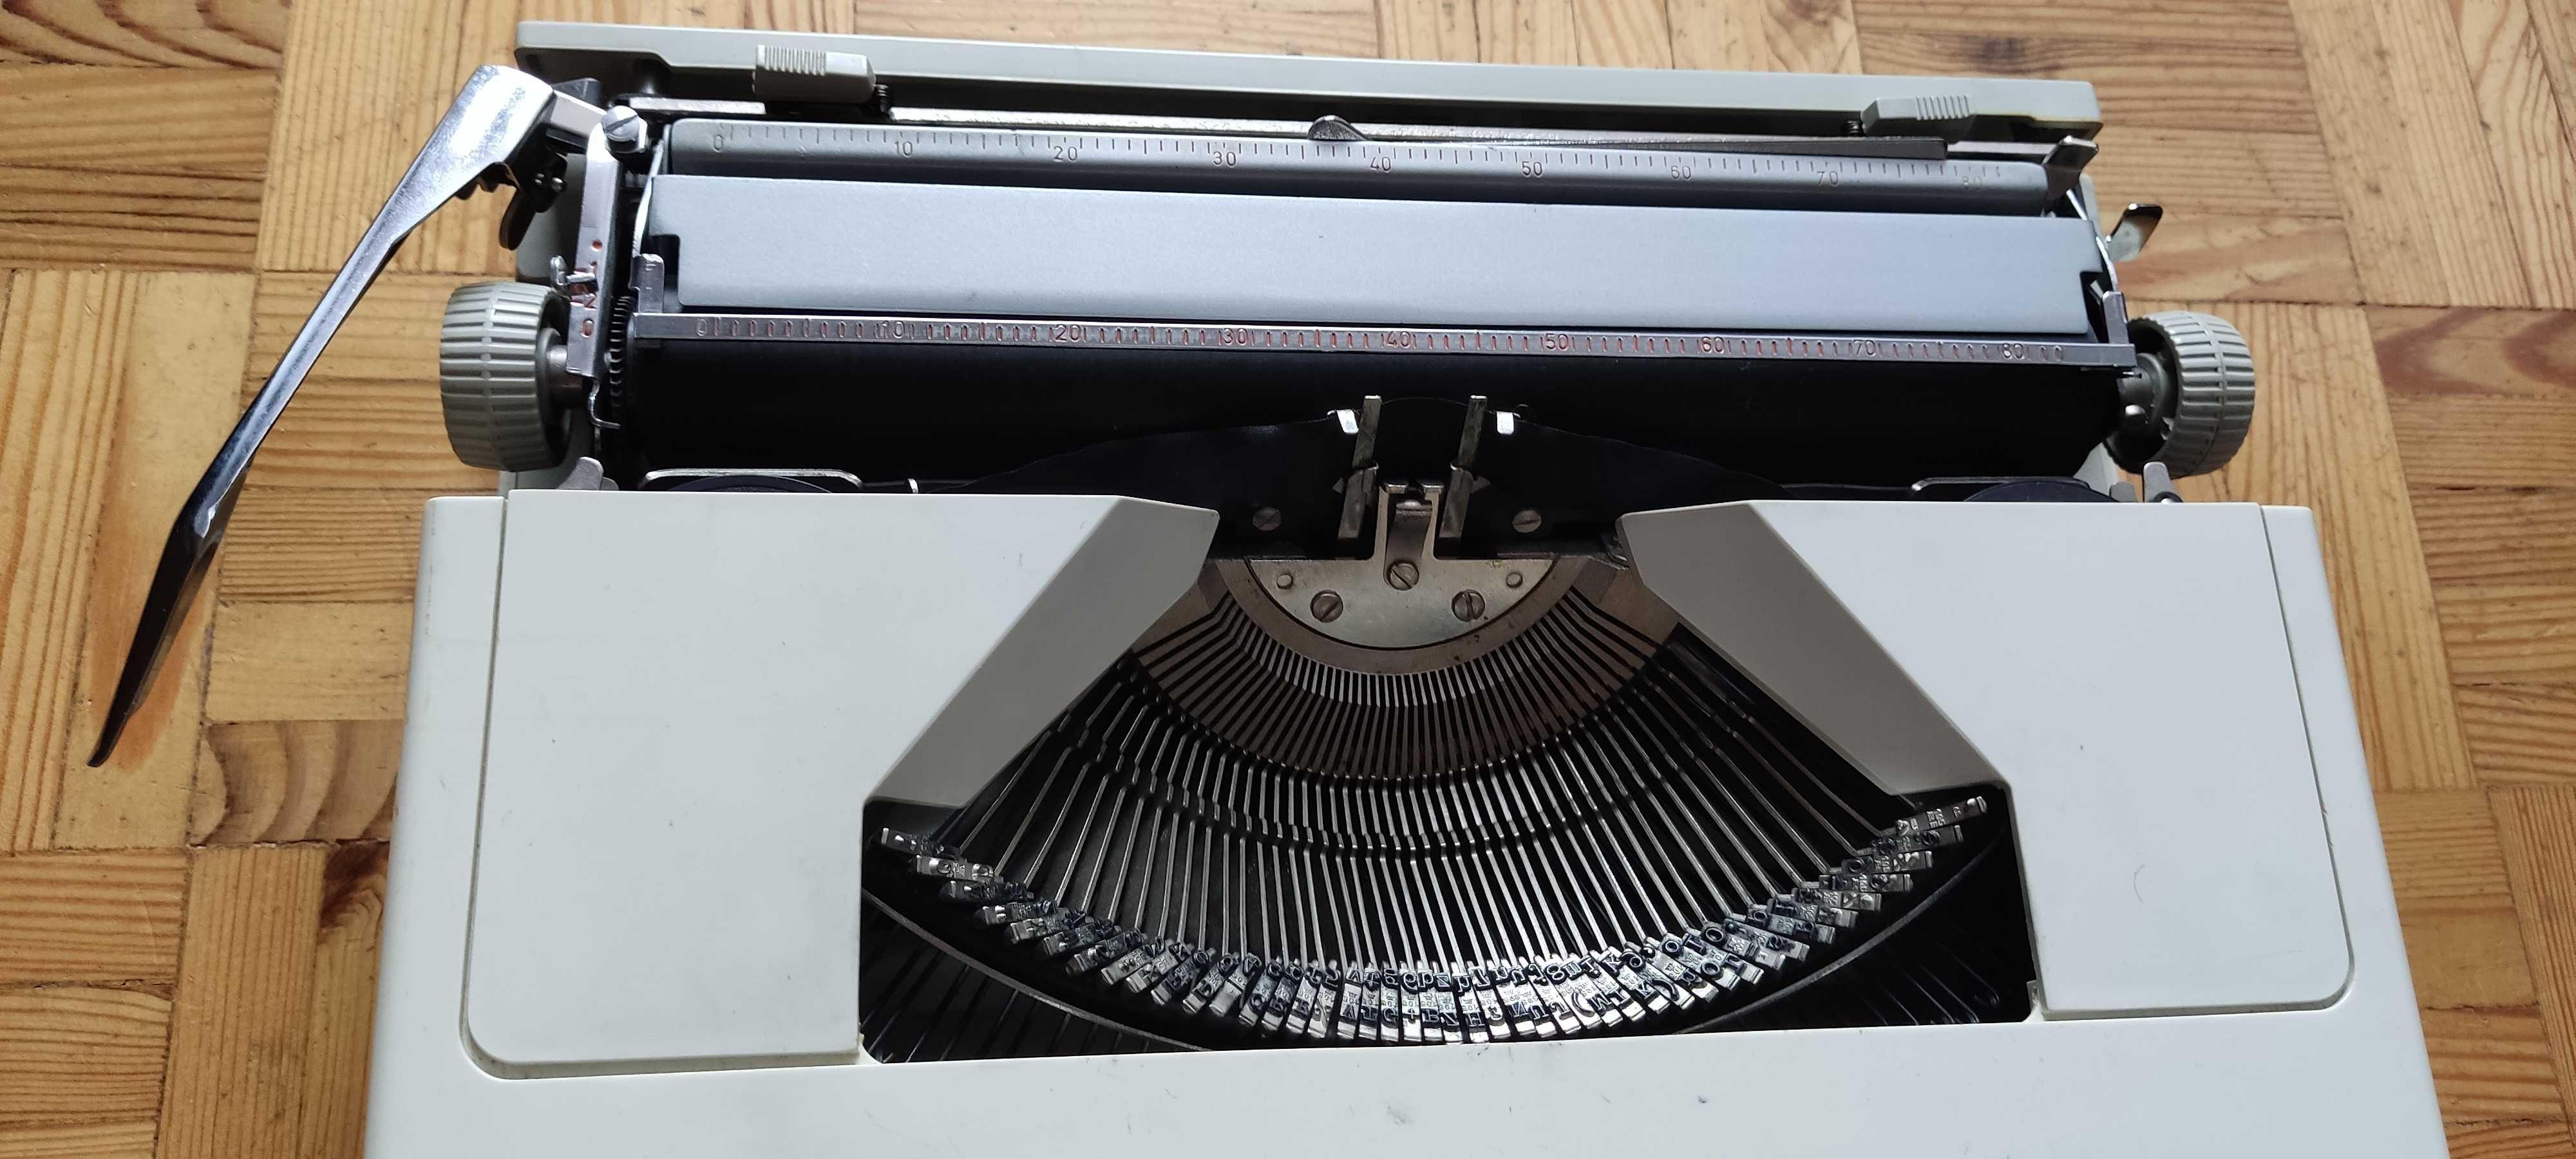 Maszyna do pisania Triumph-Adler Contessa 2 de luxe